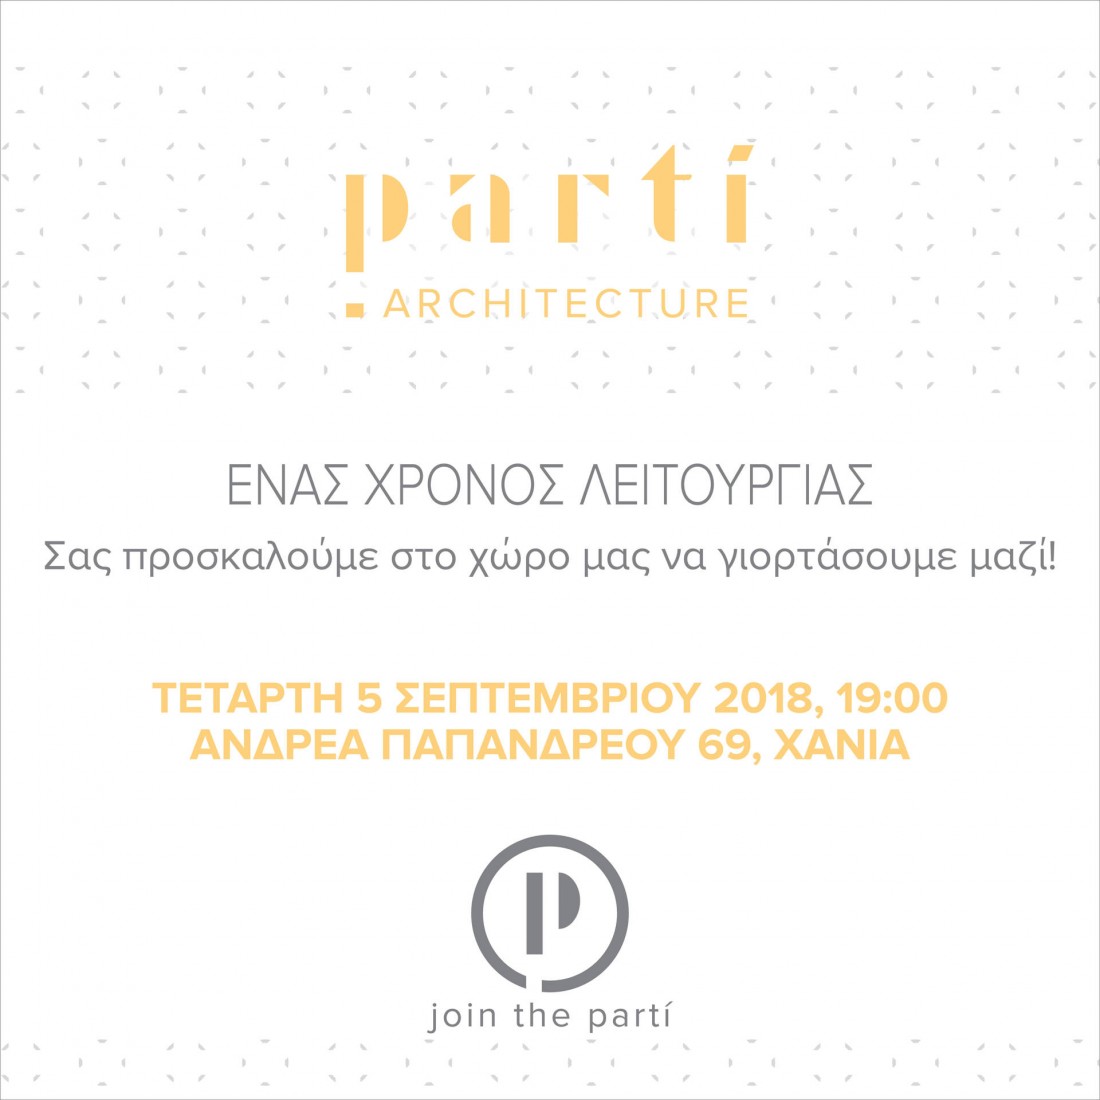 parti architecture one year celebration party invitation. Πρόσκληση για γιορτή.Ένας χρόνος λειτουργίας.